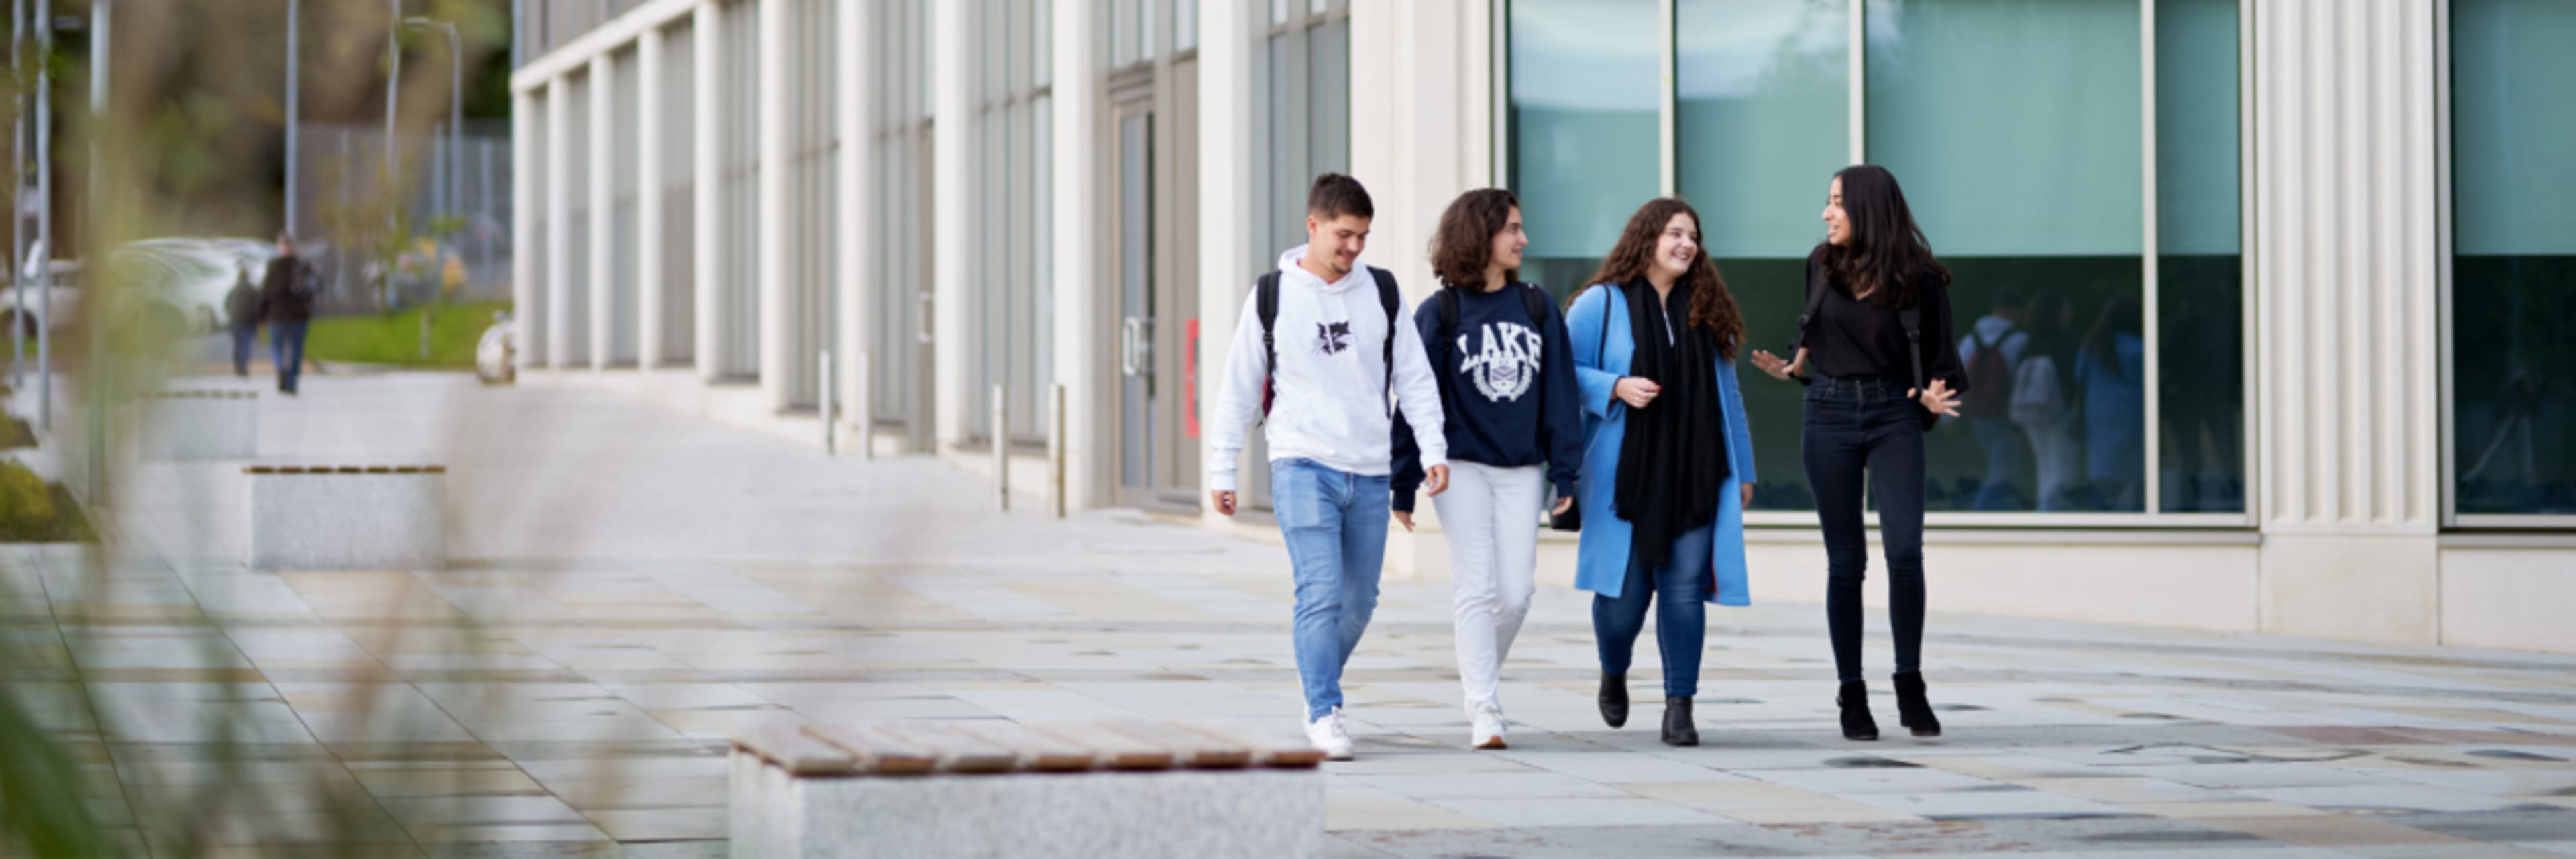 Students walking on campus at Lancaster University